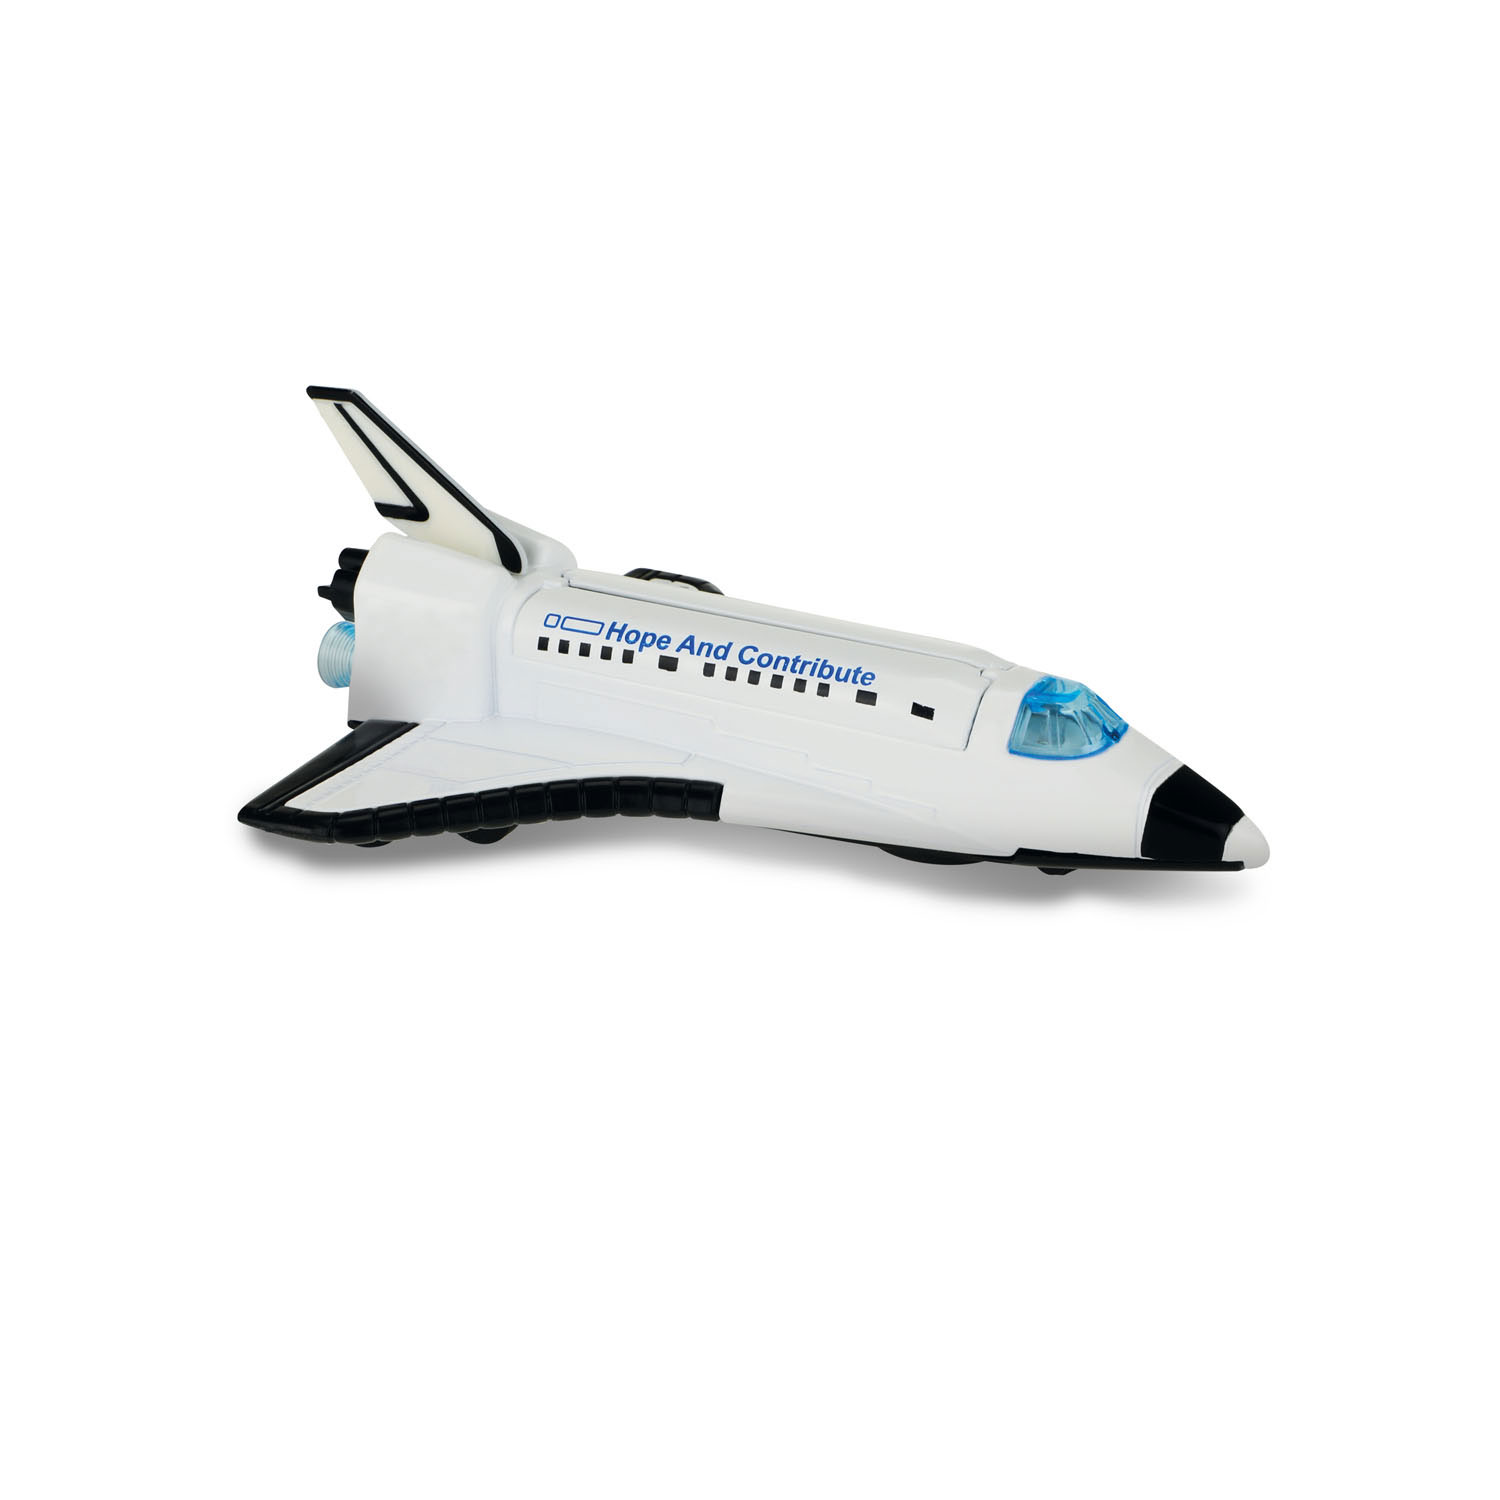 Space Shuttle met Licht & Geluid